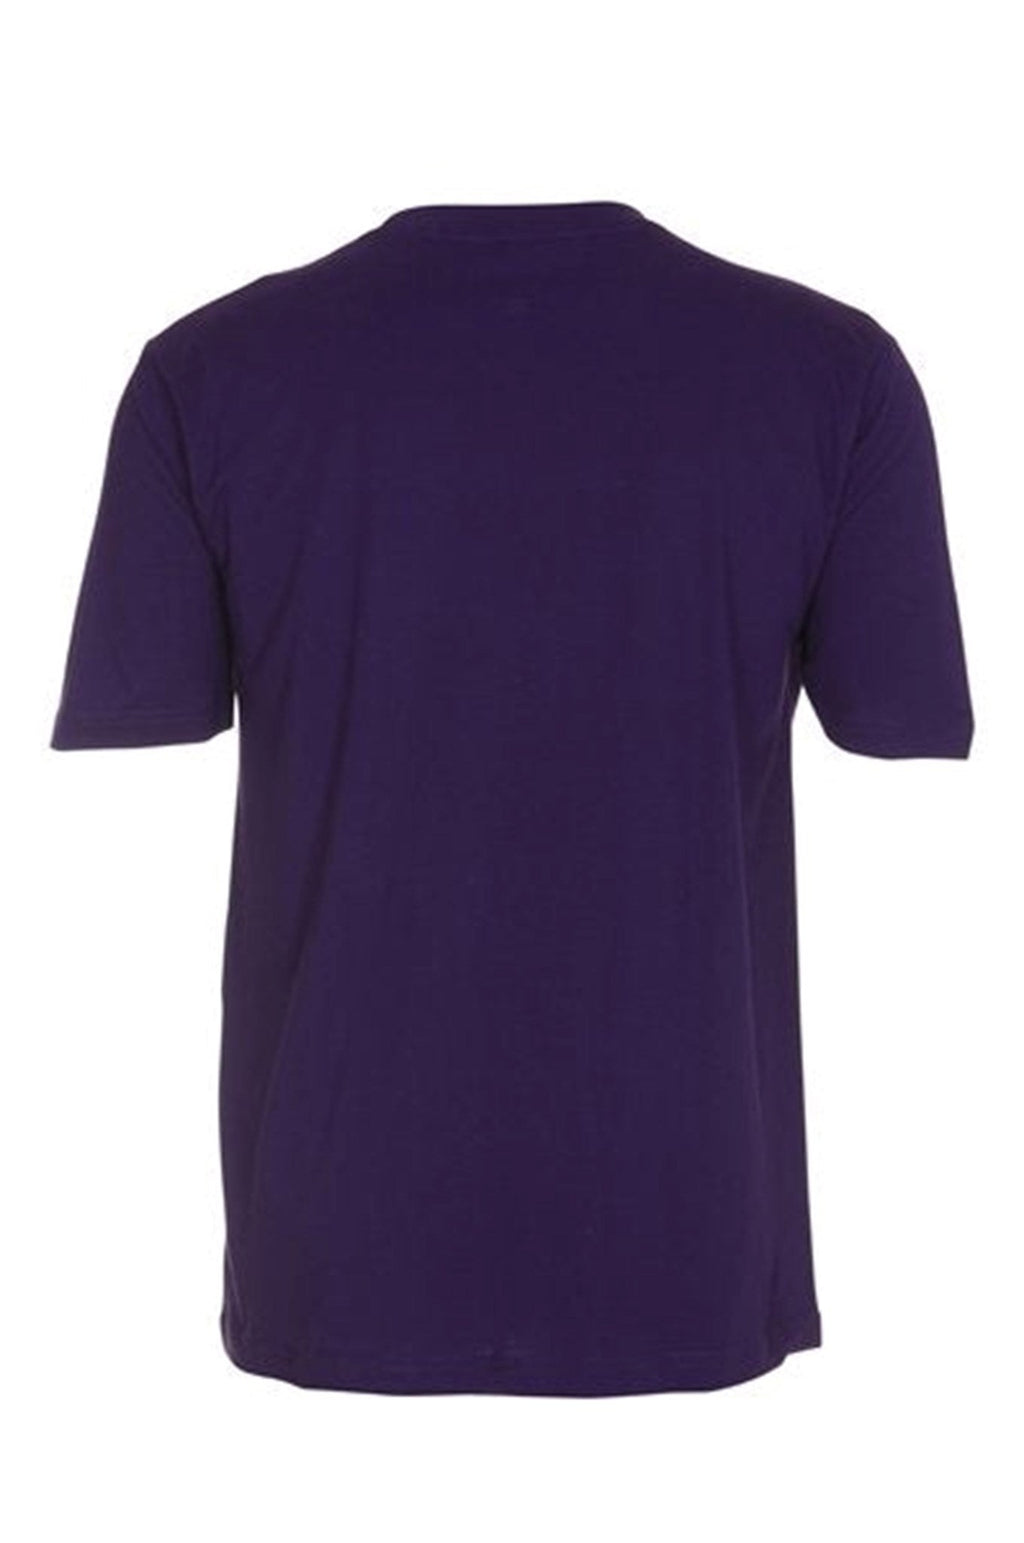 Ylisuuret t -paita - violetti